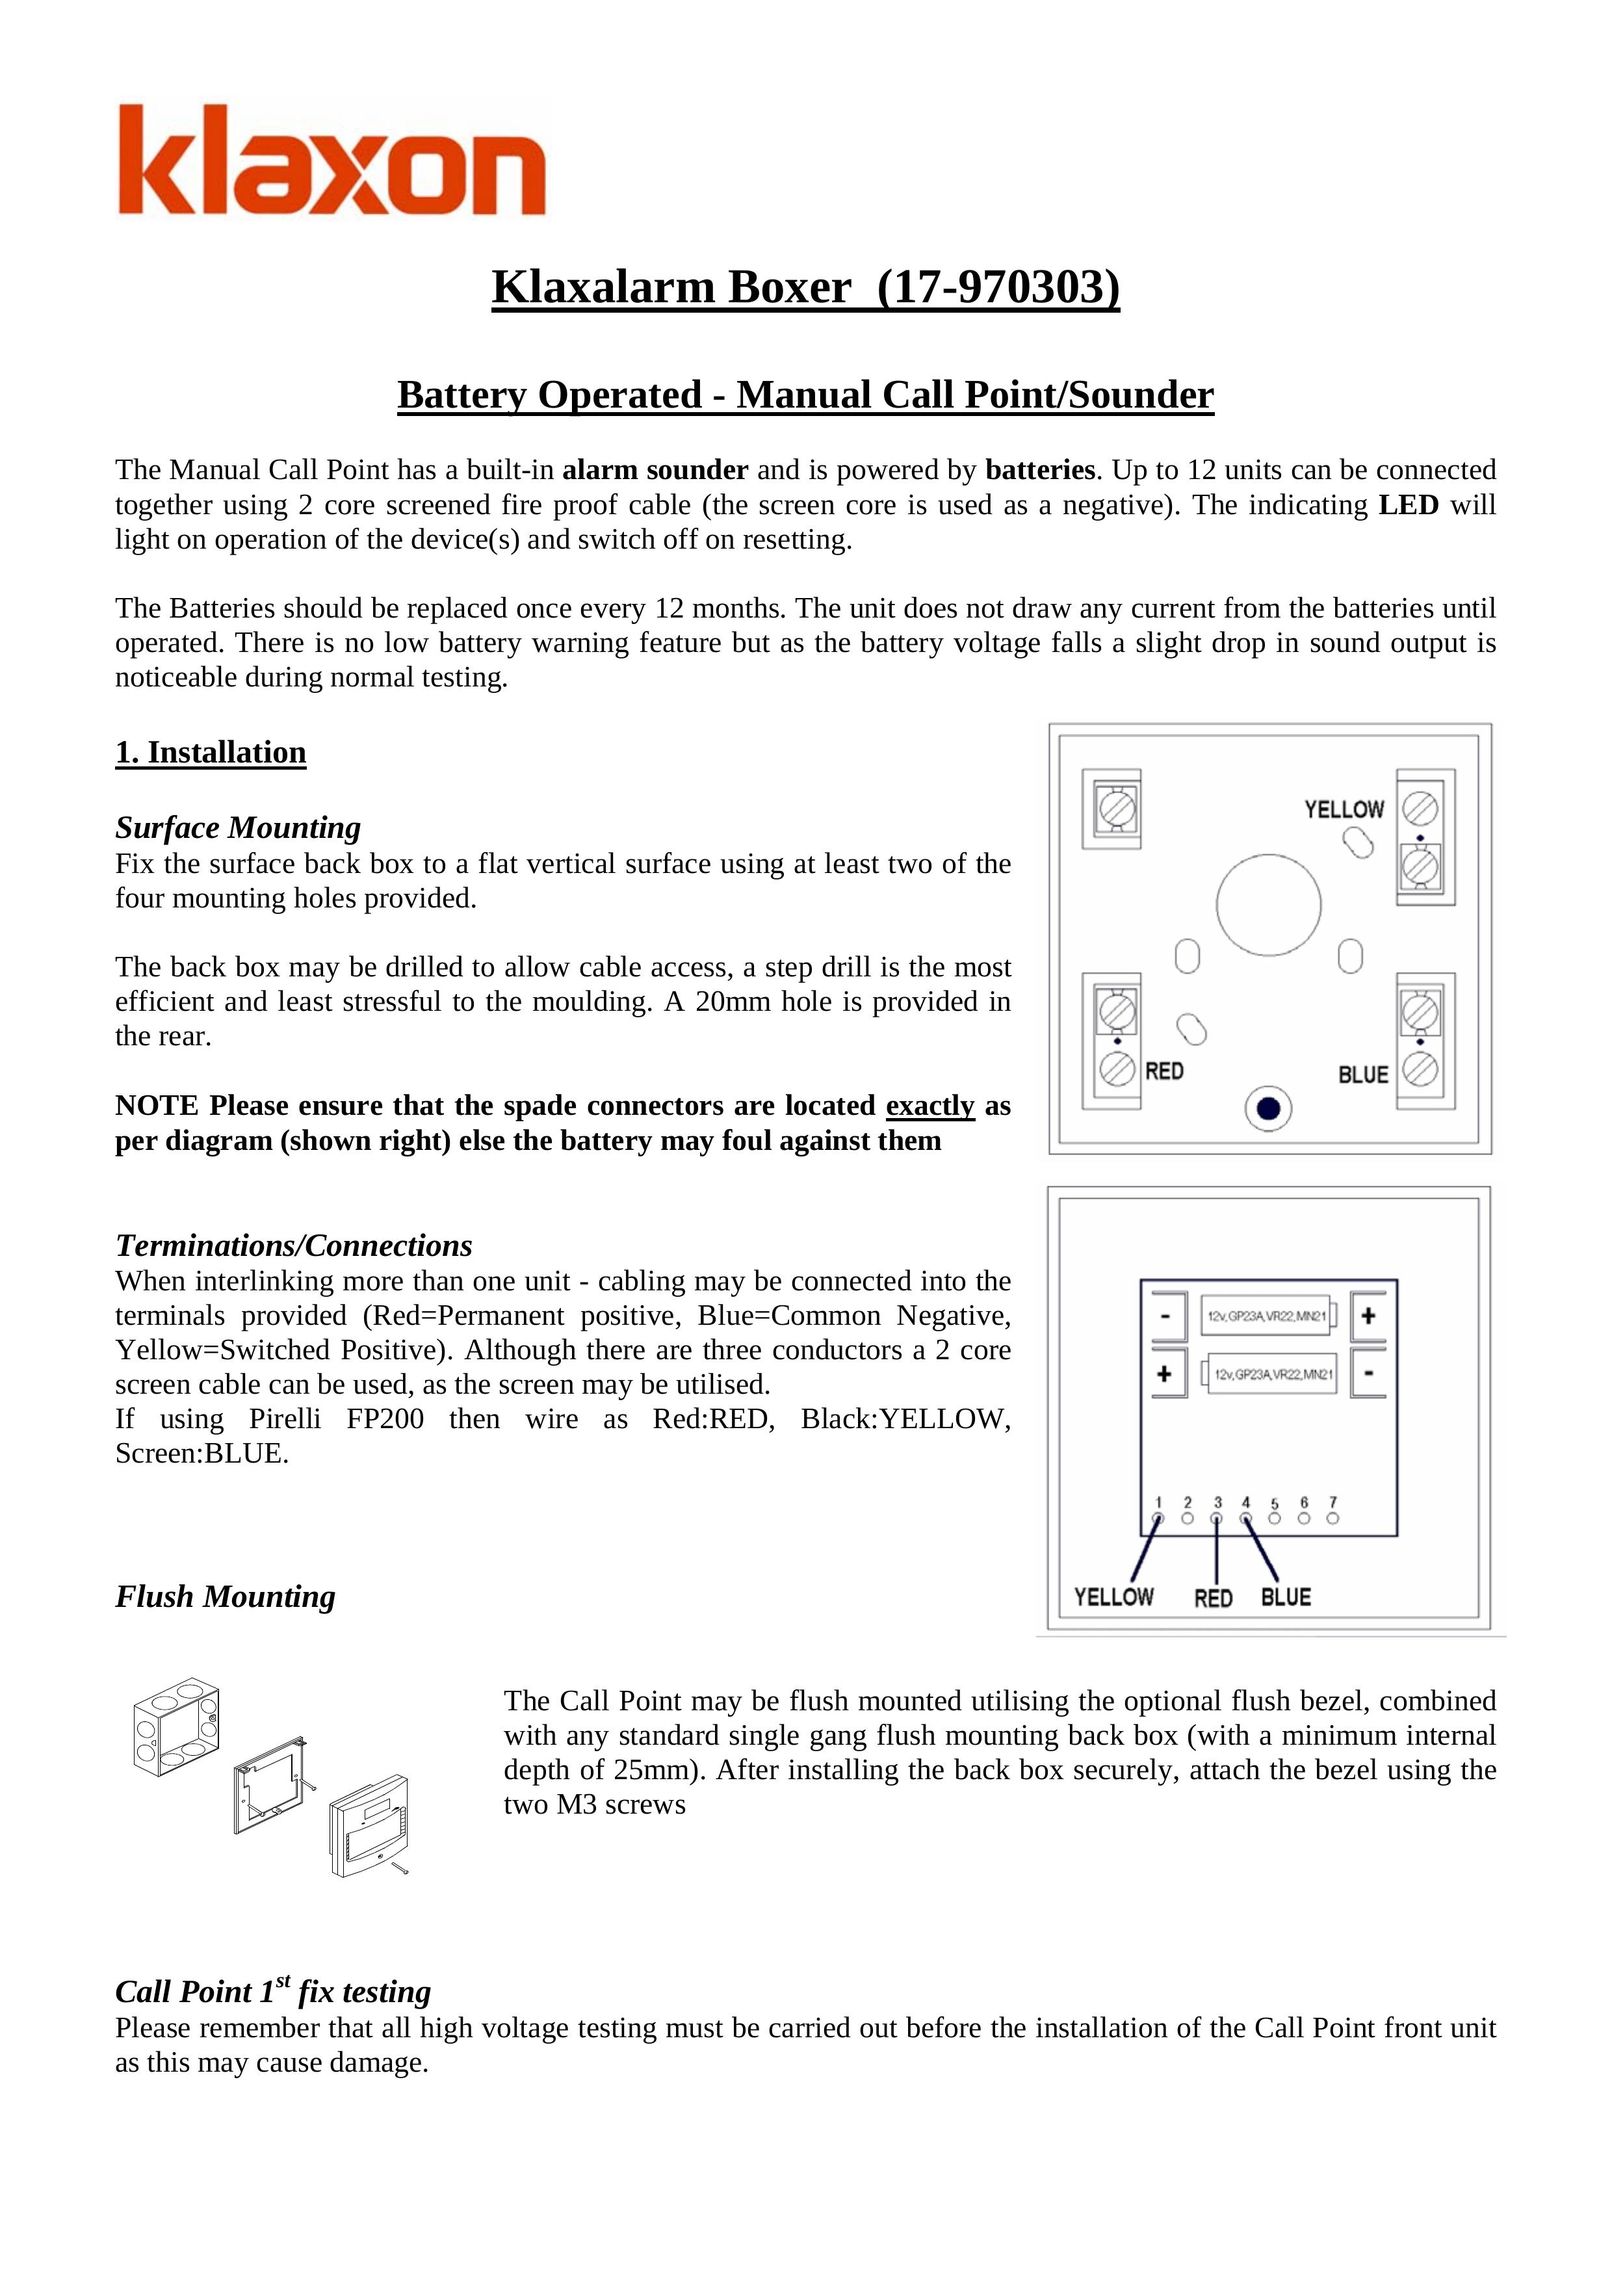 Klaxon 17-970303 Smoke Alarm User Manual